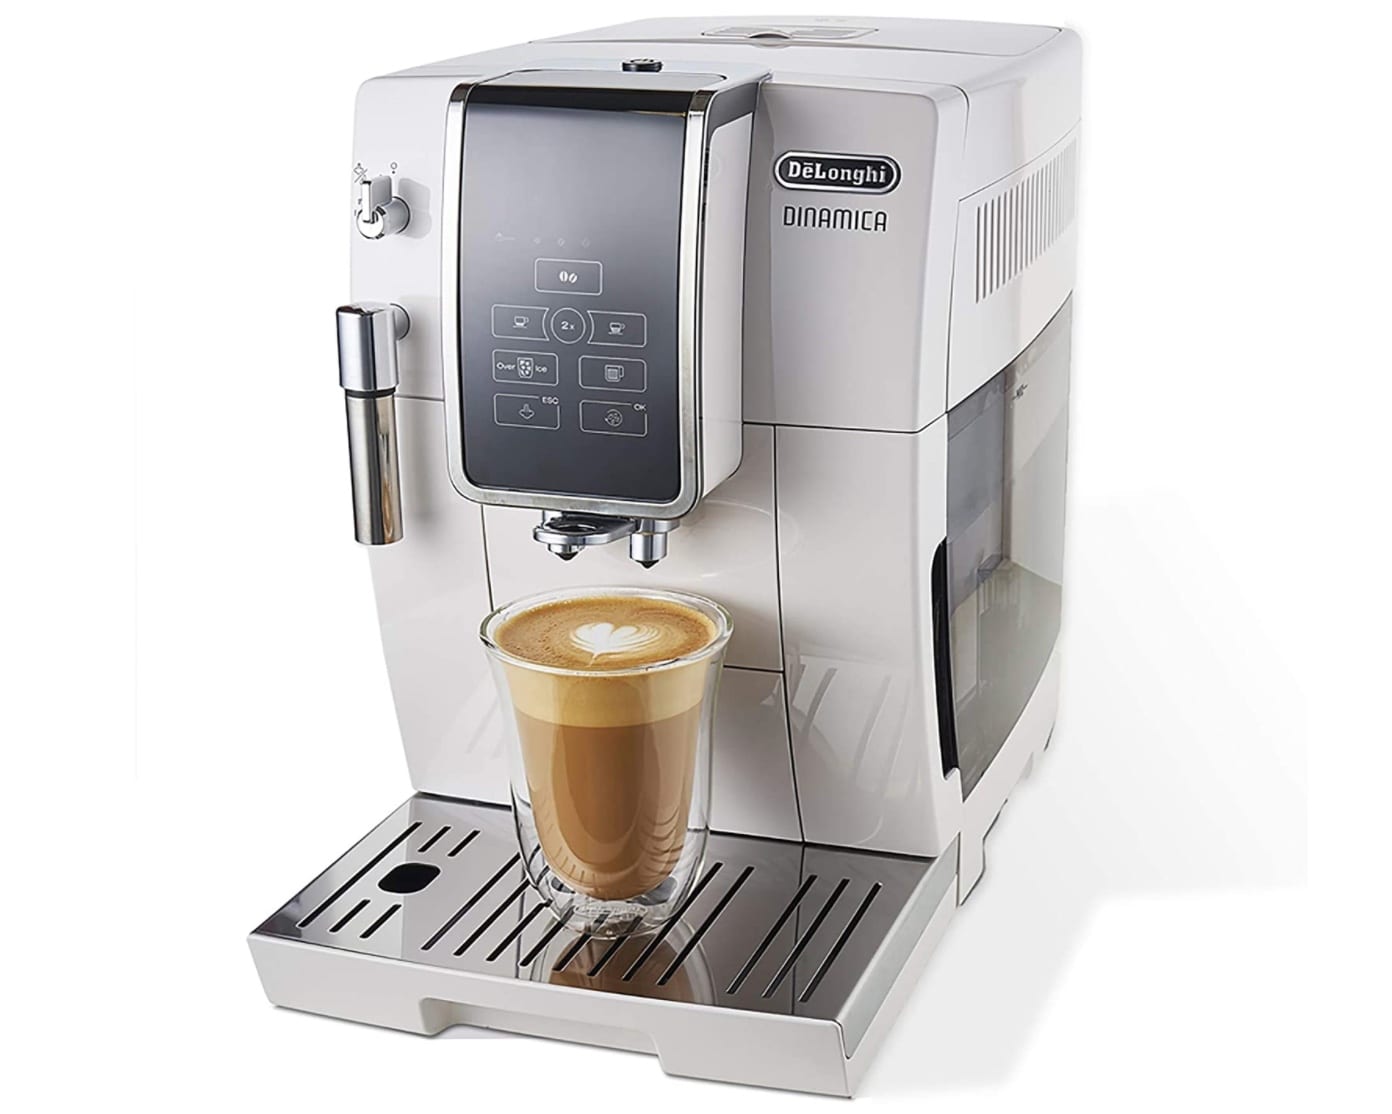 De'Longhi Dinamica Automatic Coffee and Espresso Machine